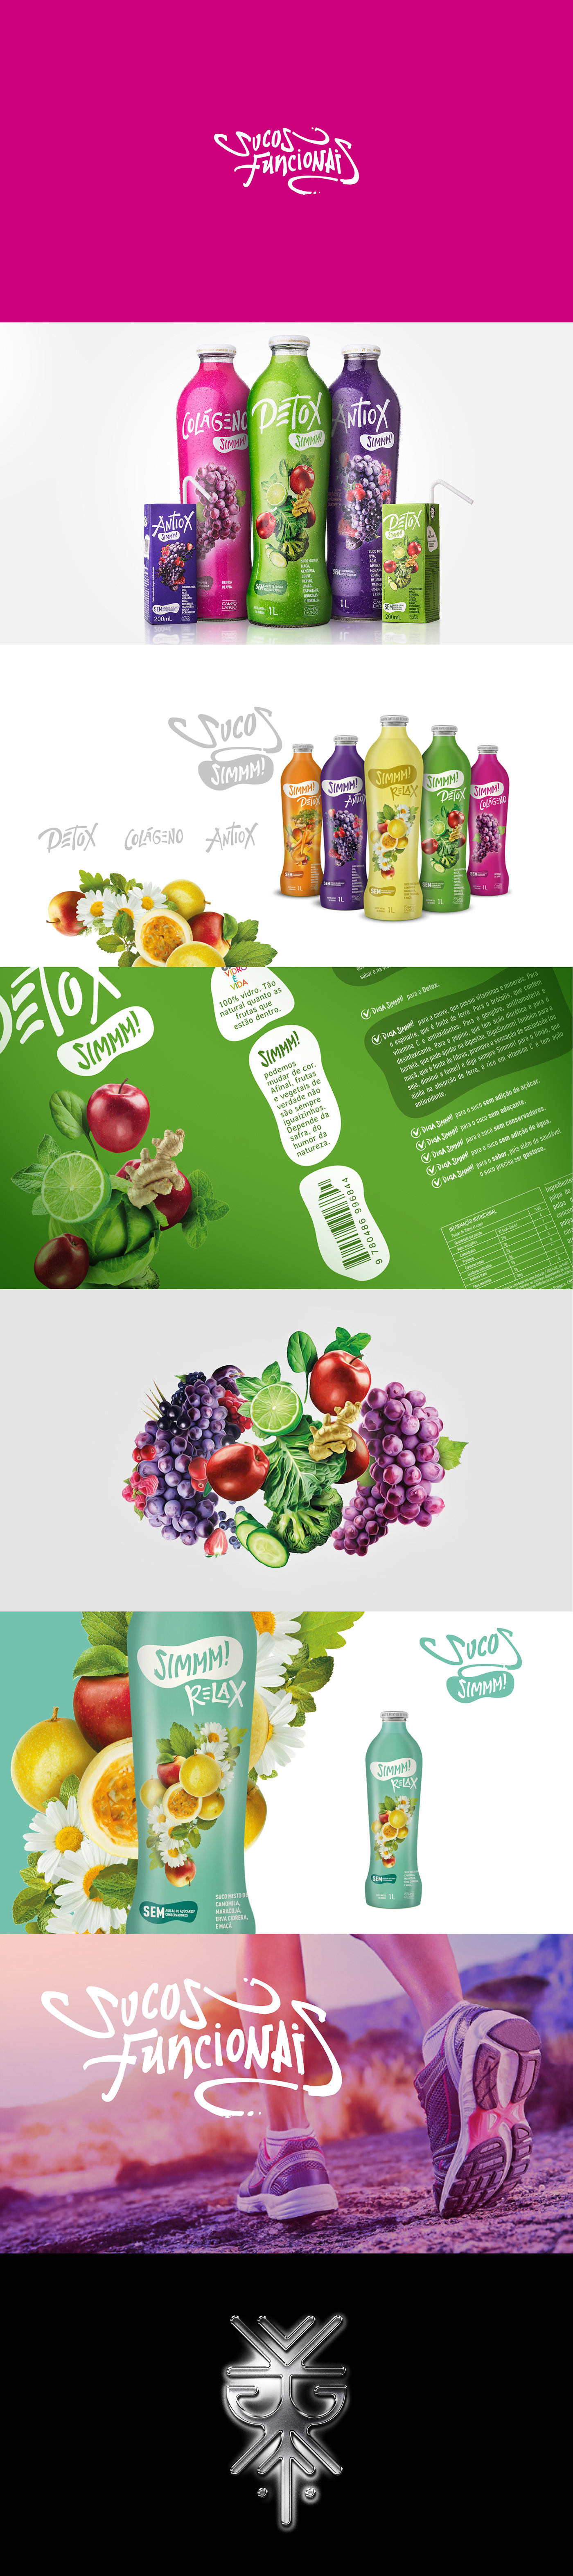 Packaging embalagens Garrafa sucos juice Health Fruit